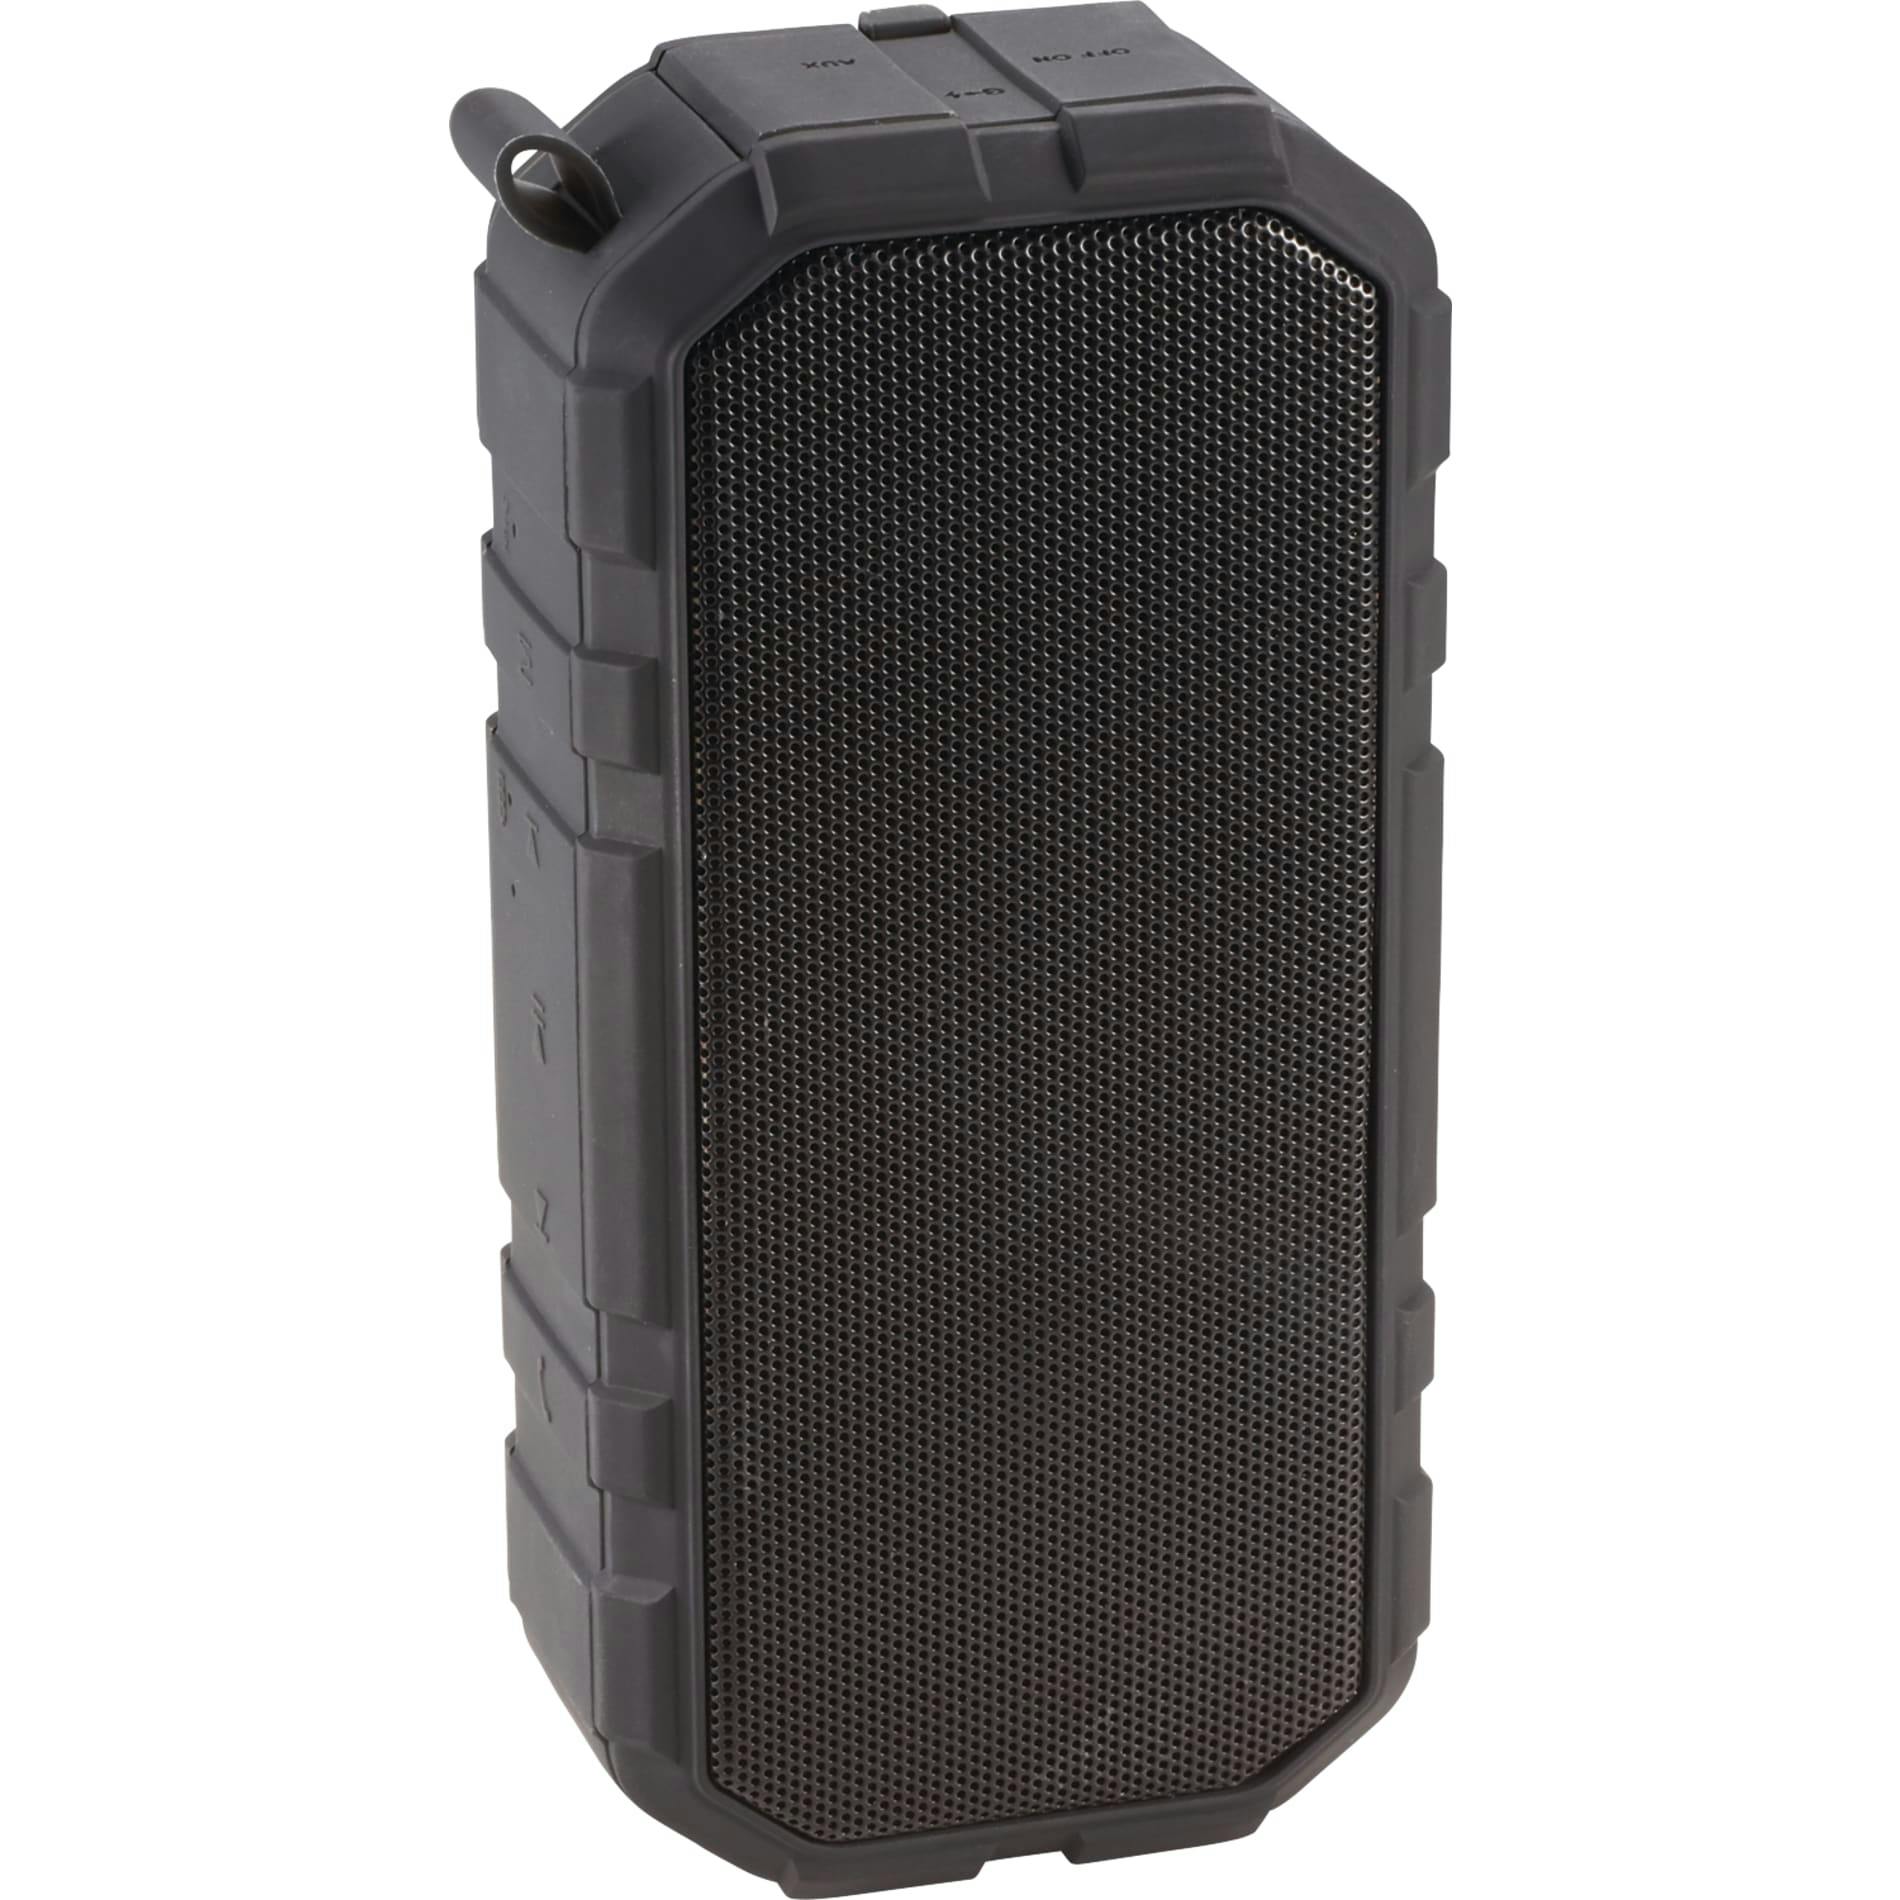 Brick Outdoor Waterproof Bluetooth Speaker - additional Image 5